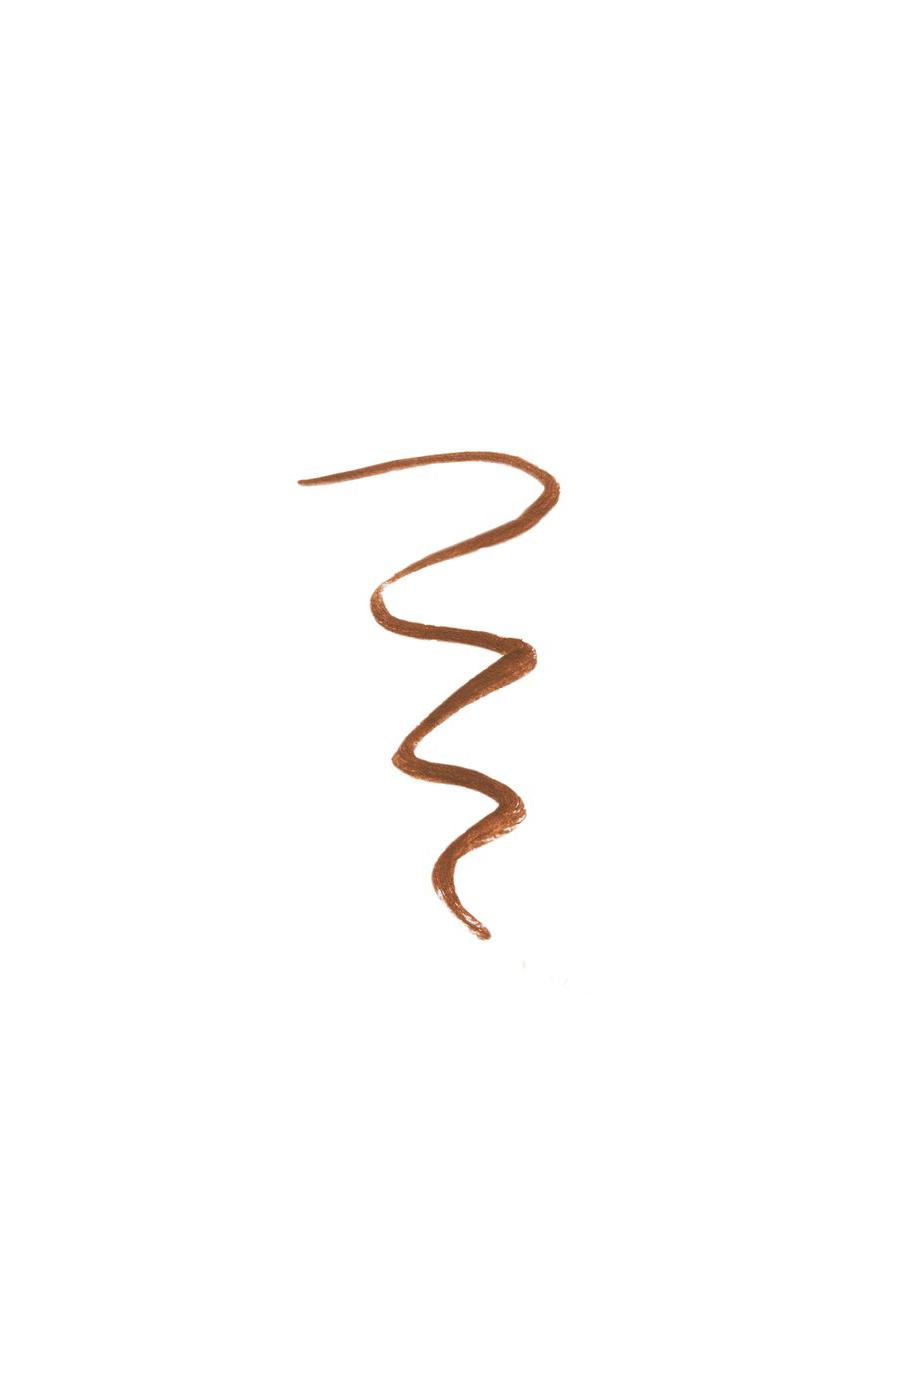 Makeup Revolution Hair Stroke Brow Pen Light Brown; image 2 of 4